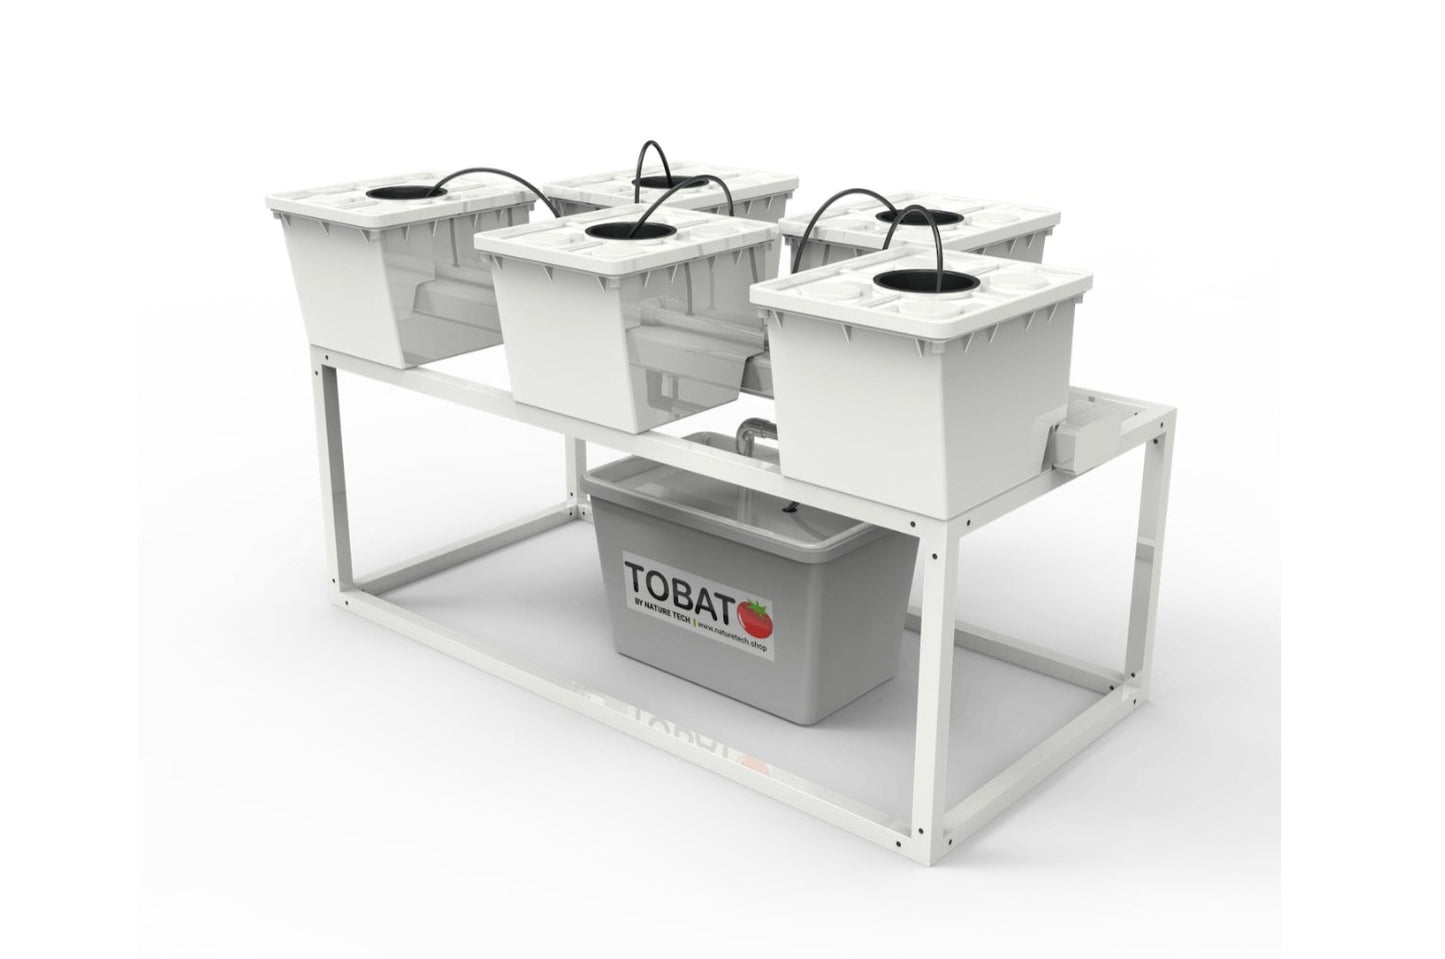 Tobato 5 – Dutch Bucket Hydroponic Growing System